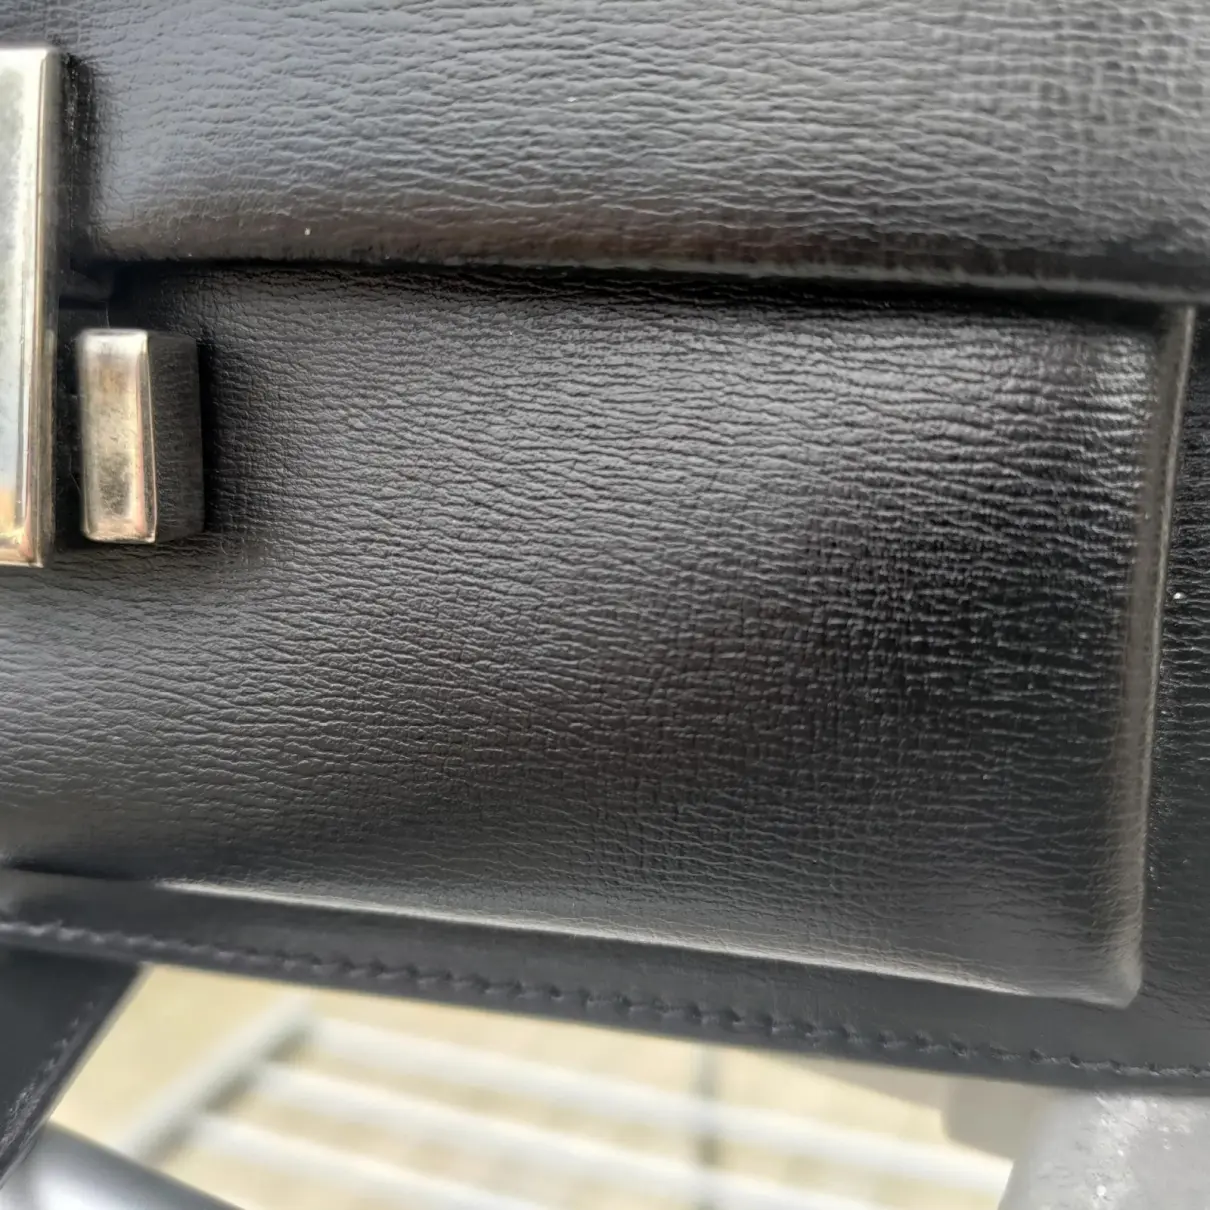 Bellechasse leather handbag Saint Laurent